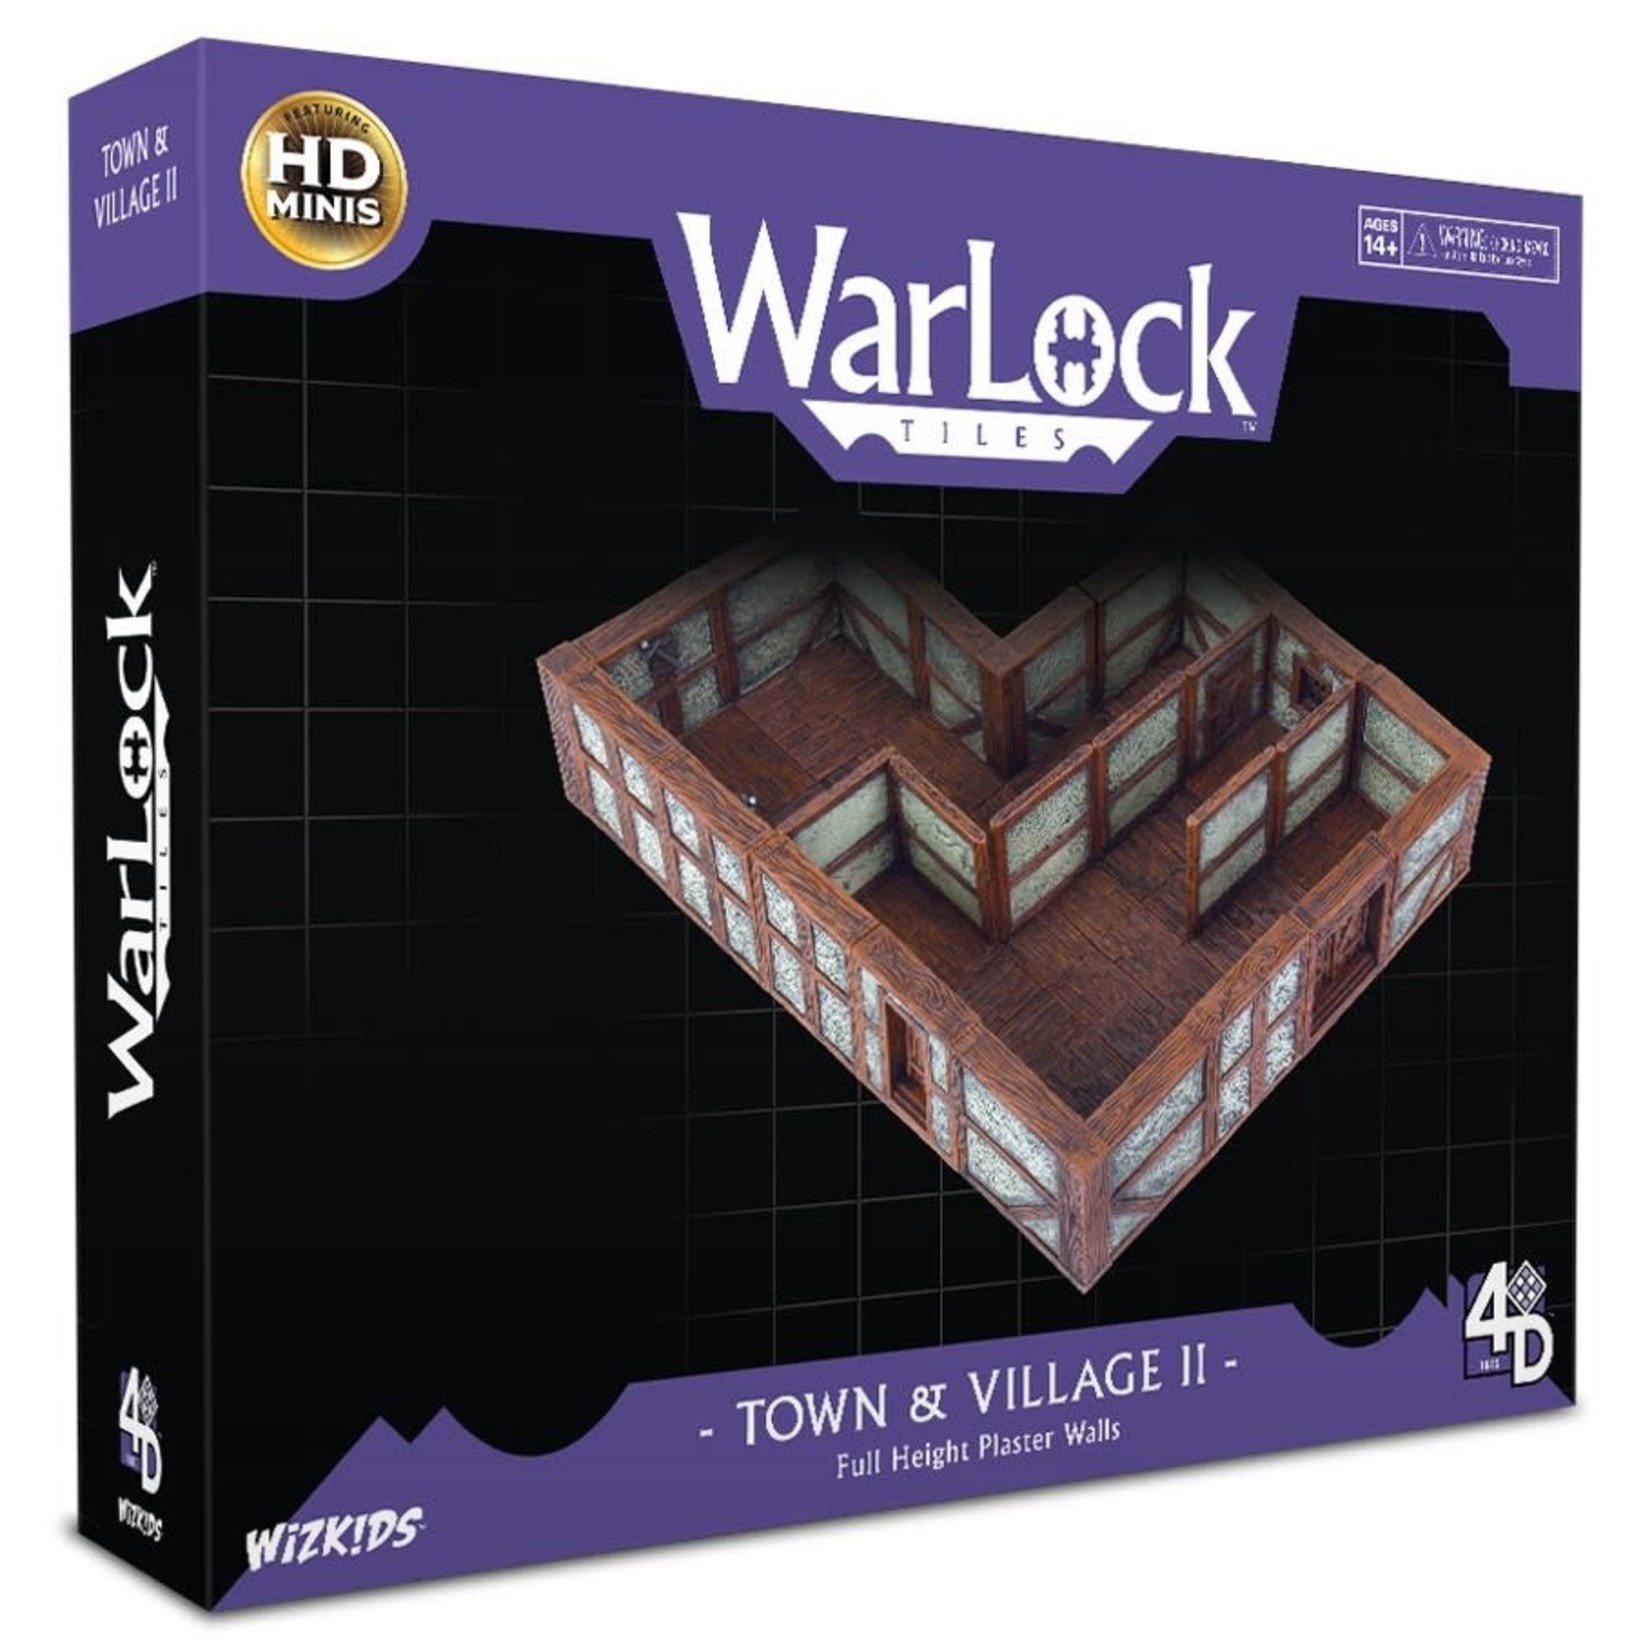 WizKids Warlock Tiles: Town & Village II: Full Height Plaster Walls